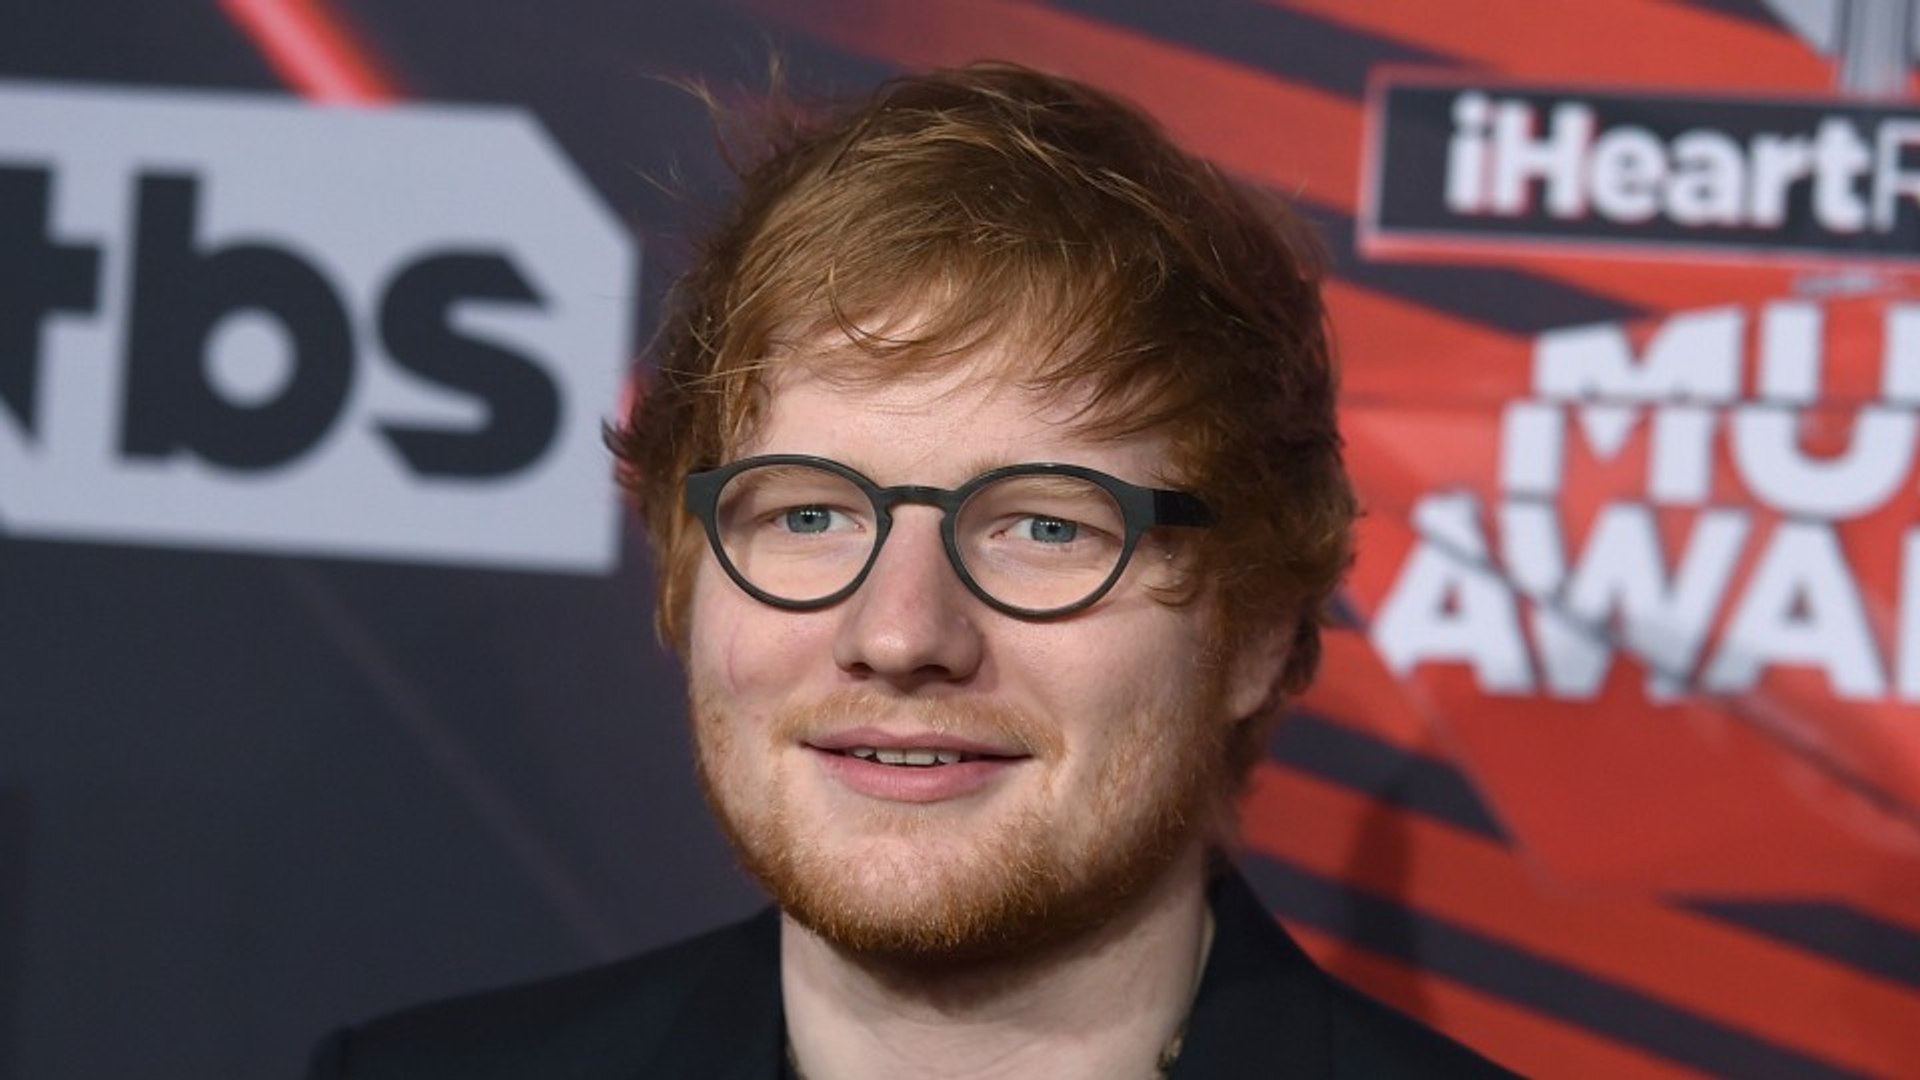 Ed Sheeran to Go on U.S. Concert Tour